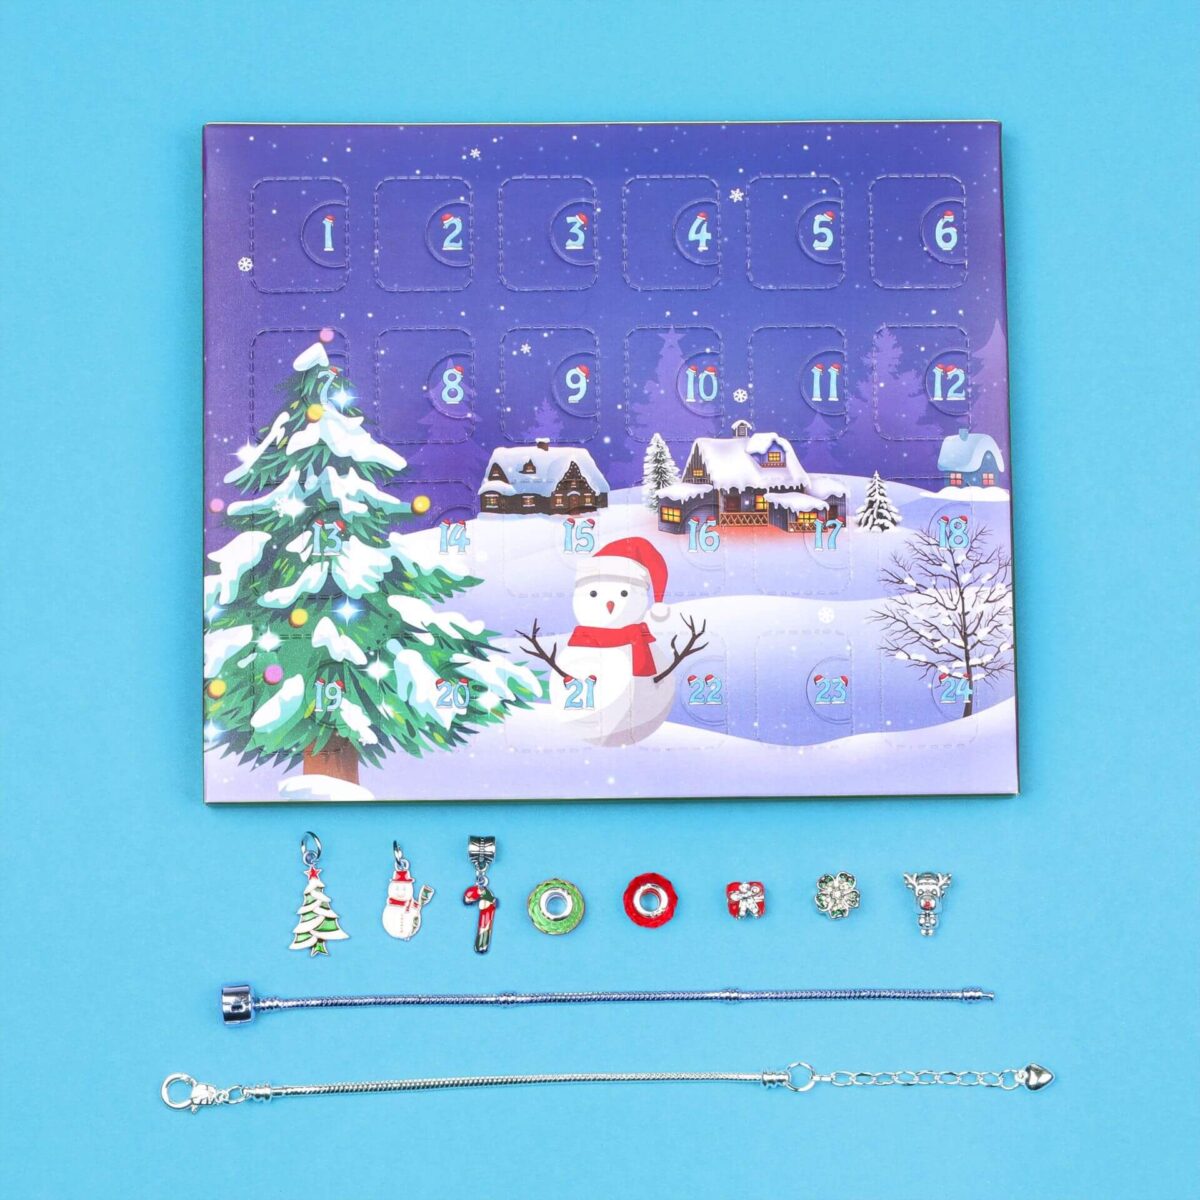 Christmas Advent Calenar Countdown Blind Box DIY Jewelry Bracelet Gift Box Description Image 4 1